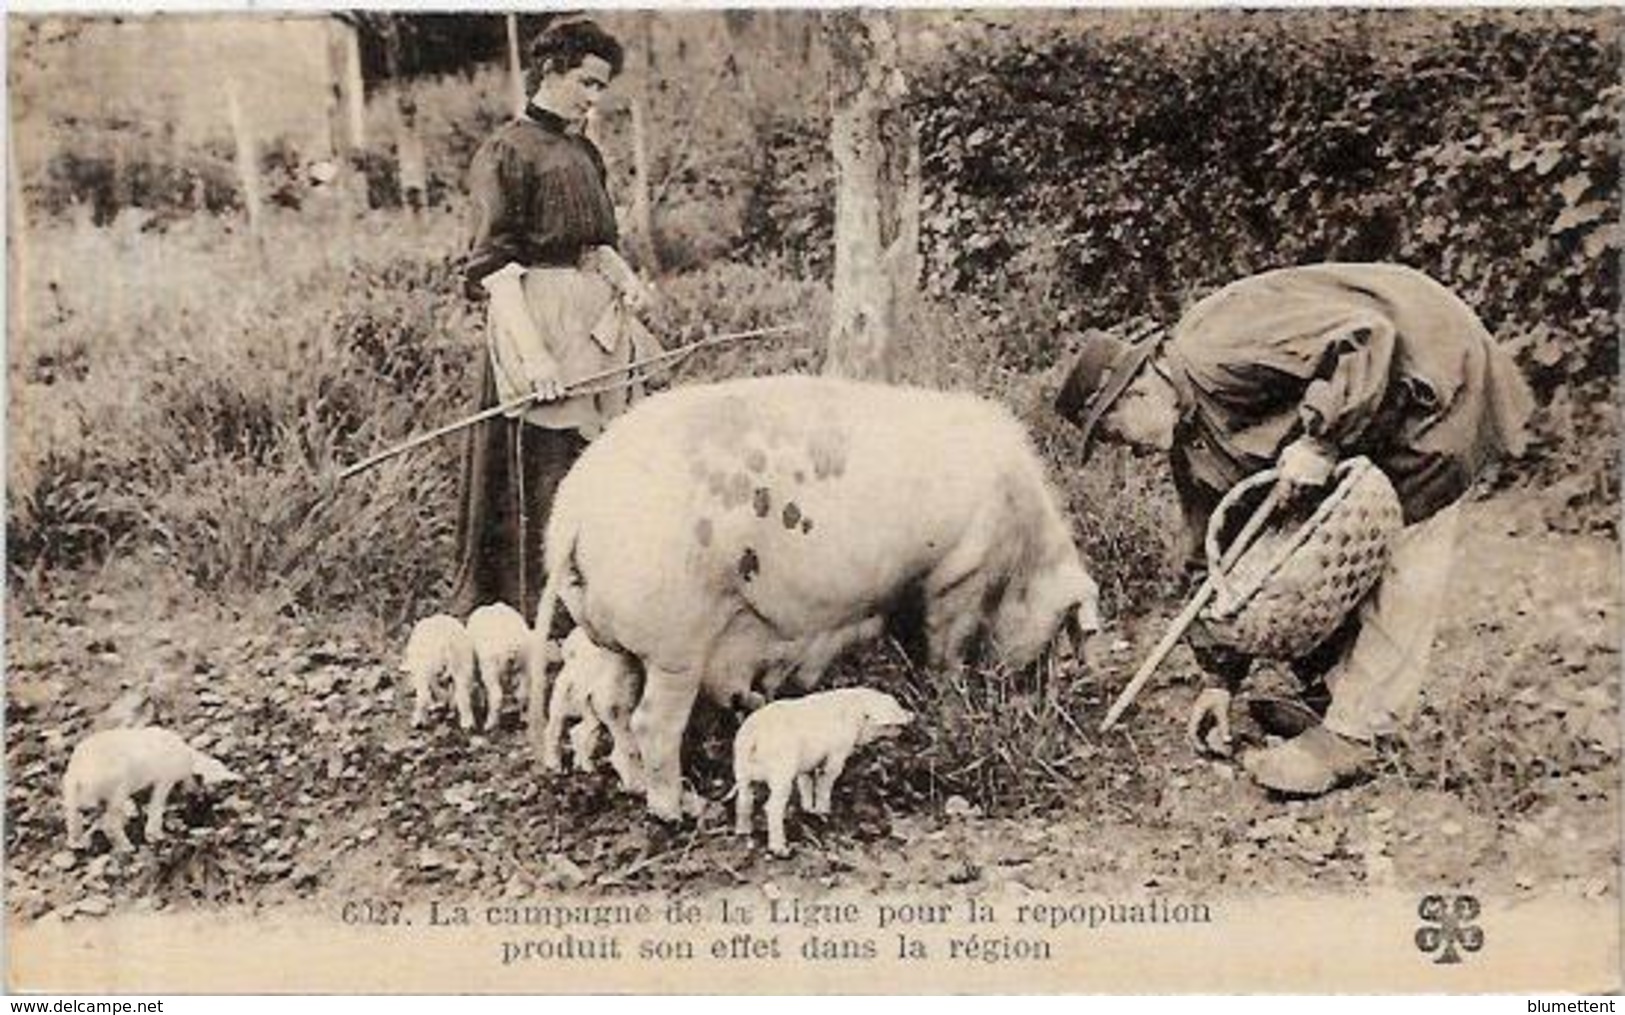 CPA Région Périgord Dordogne Cochon Truffier Pig Truffes Champignon Mushroom Métier Non Circulé - Otros